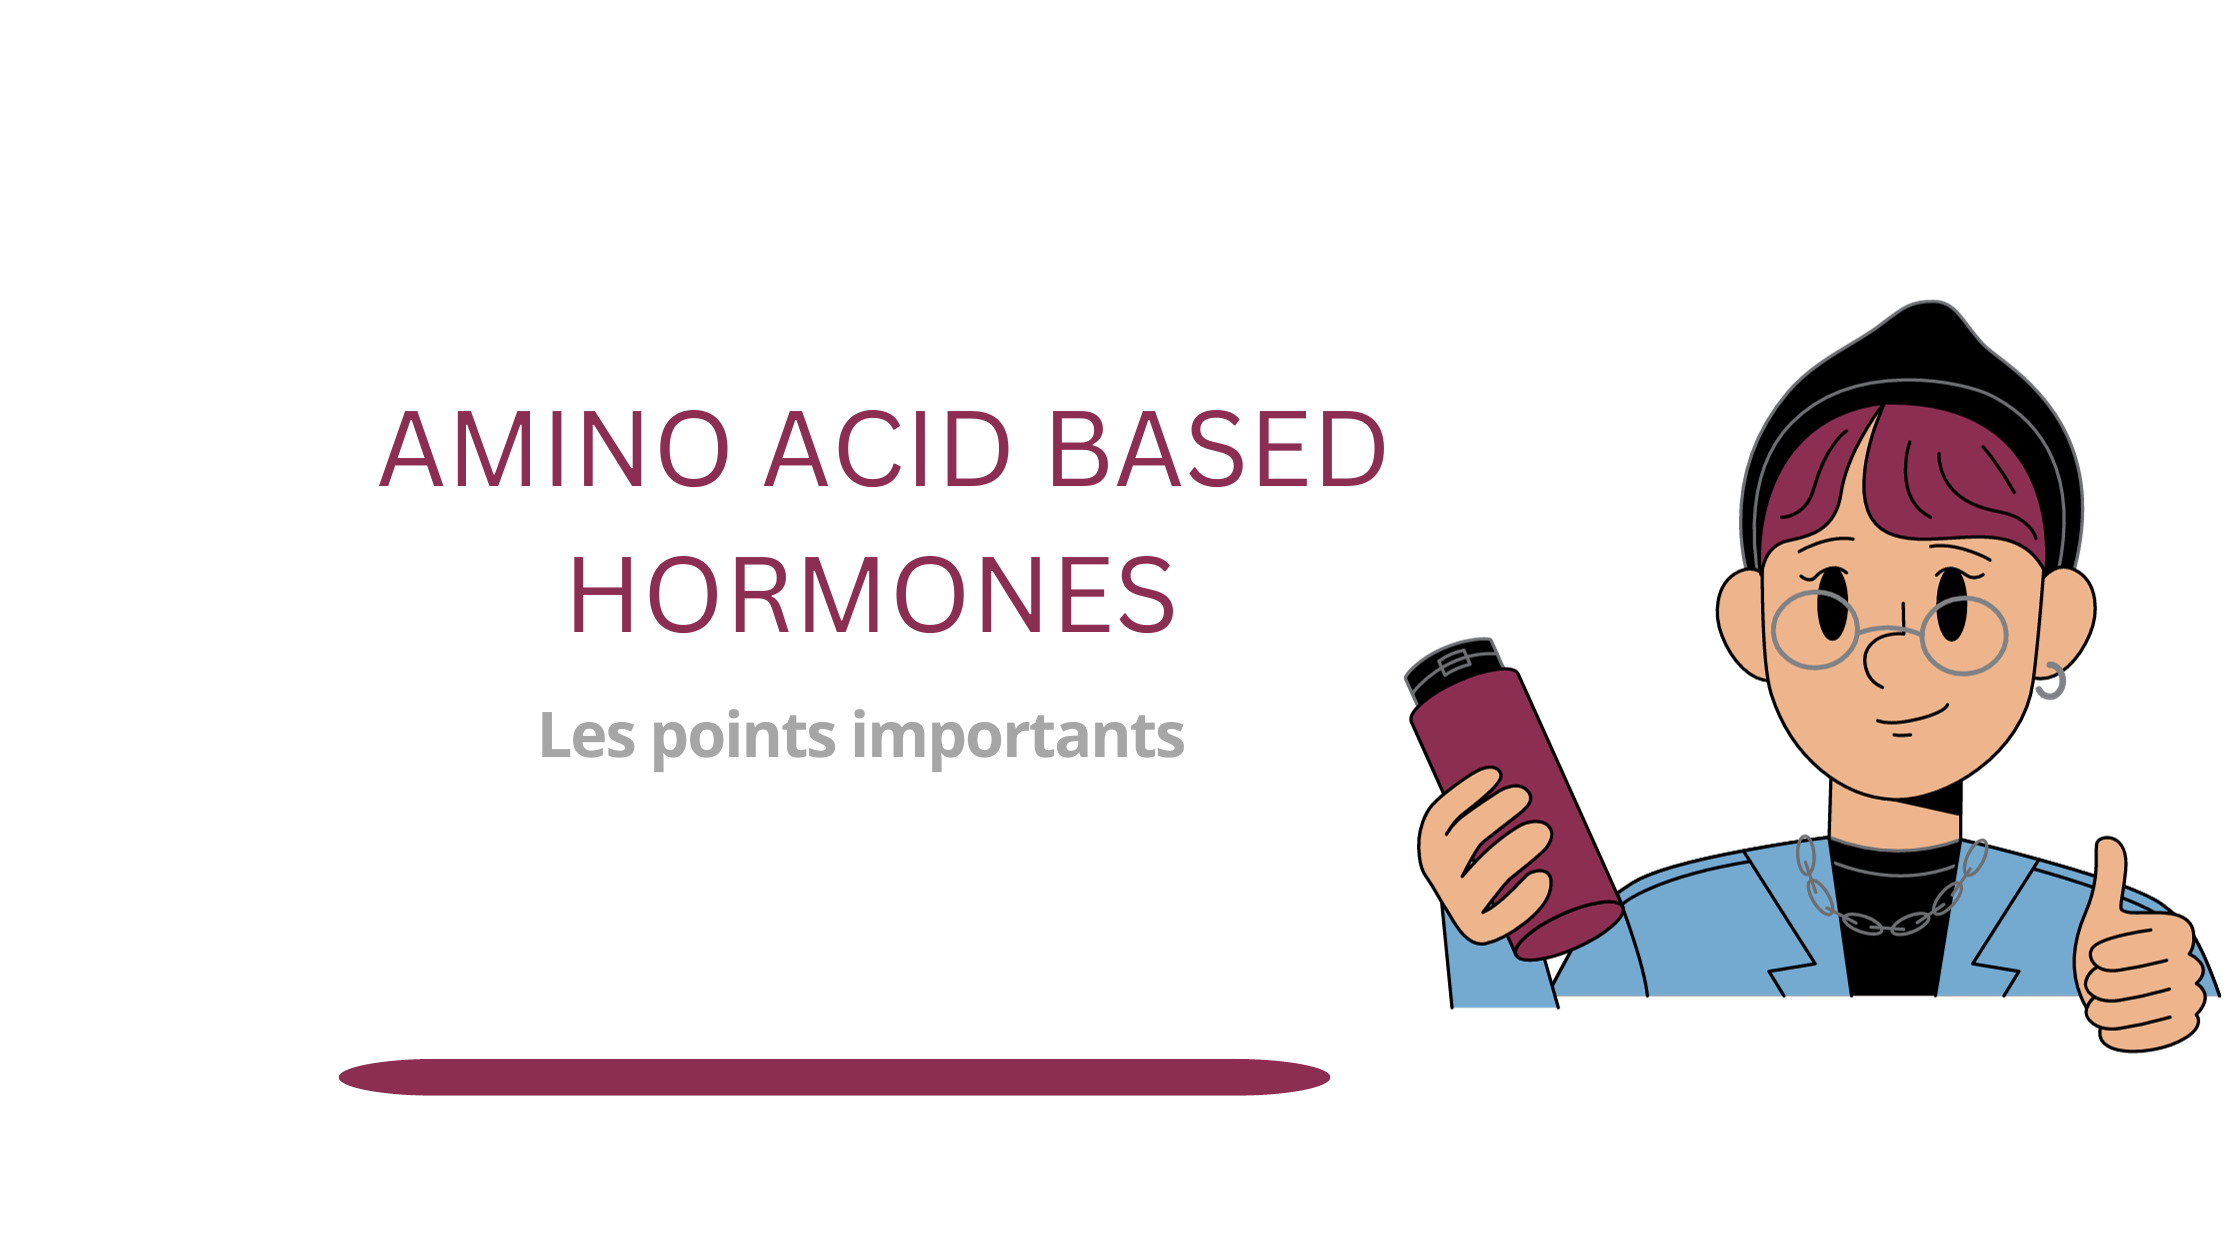 amino acid based hormones | Les points importants